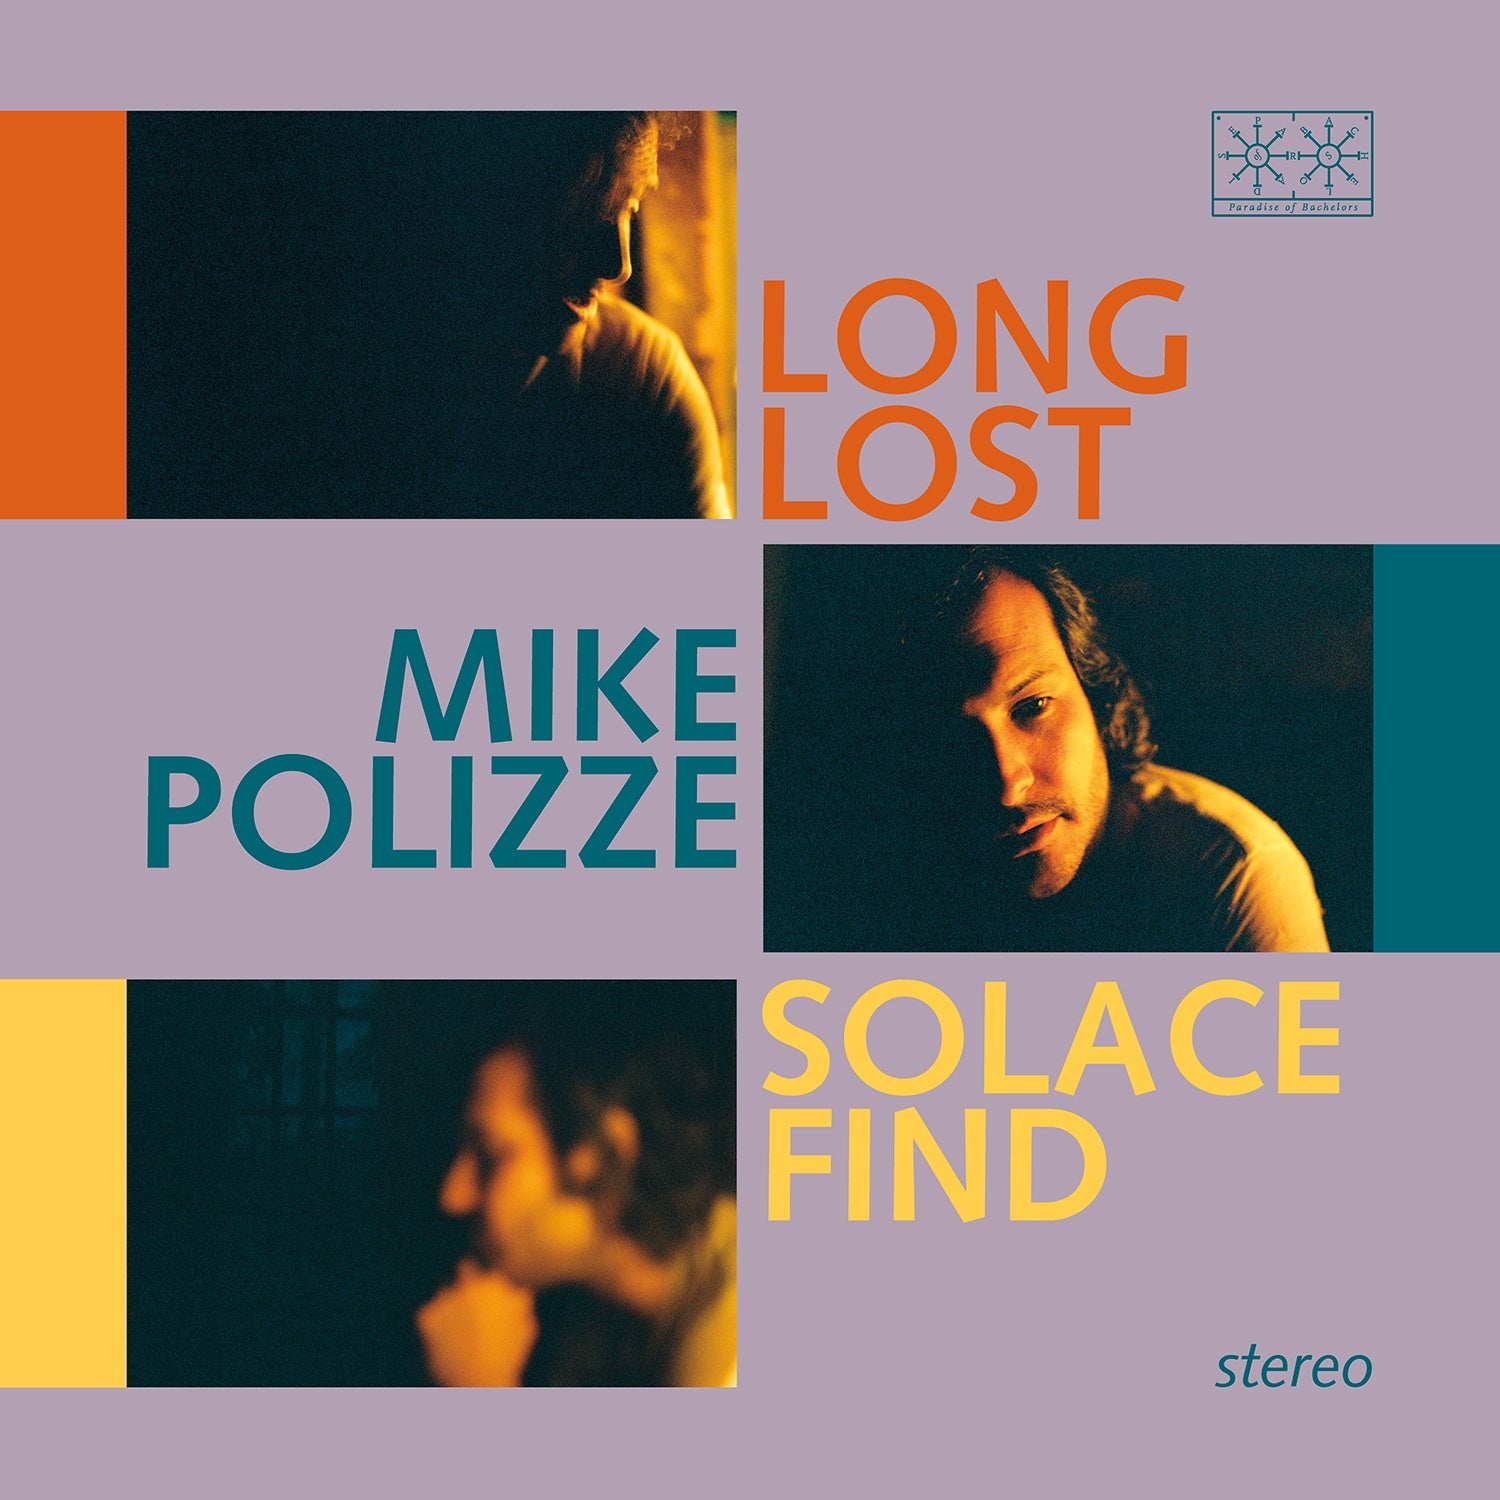 Mike Polizze - Long Lost Solace Find - New LP Record 2020 Paradise of Bachelors Transparent Blue Vinyl - Acoustic Rock